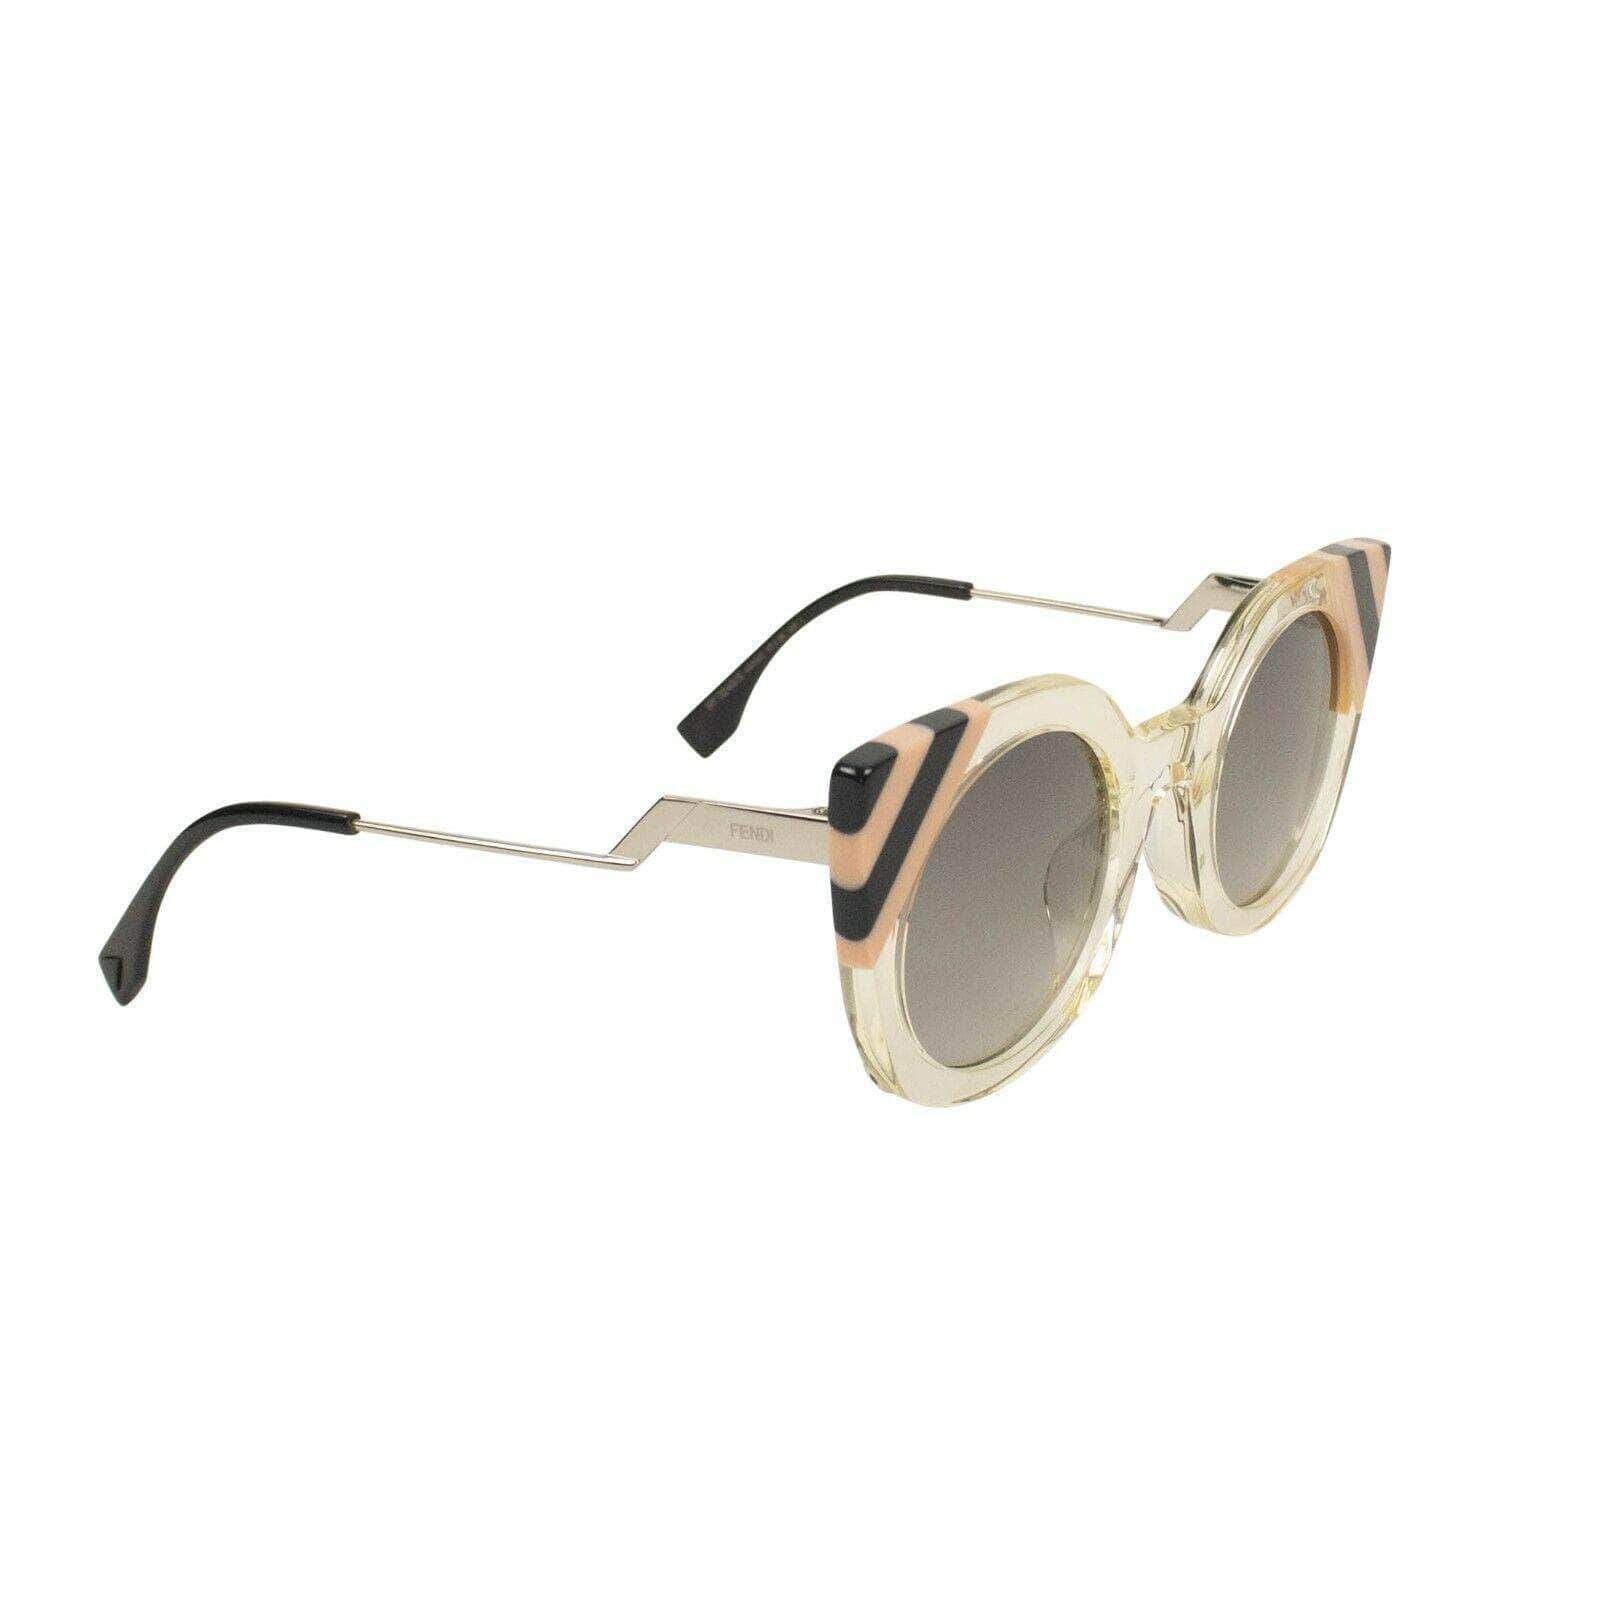 Fendi Women's Cat-Eye Sunglasses